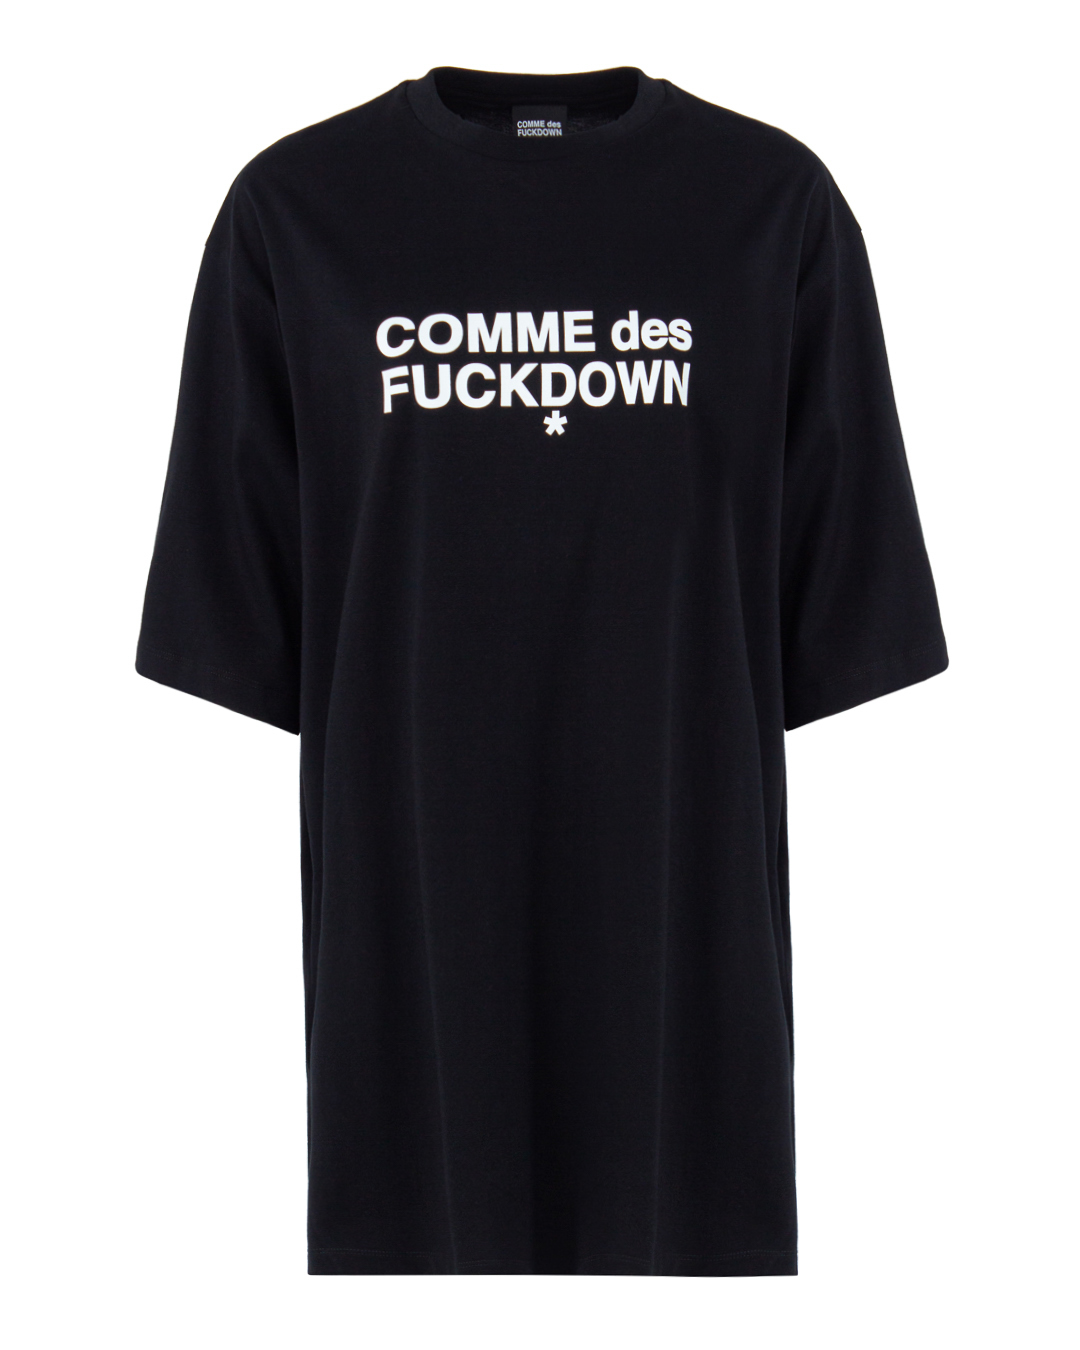 COMME des FUCKDOWN с логотипом бренда  артикул  марки COMME des FUCKDOWN купить за 12800 руб.